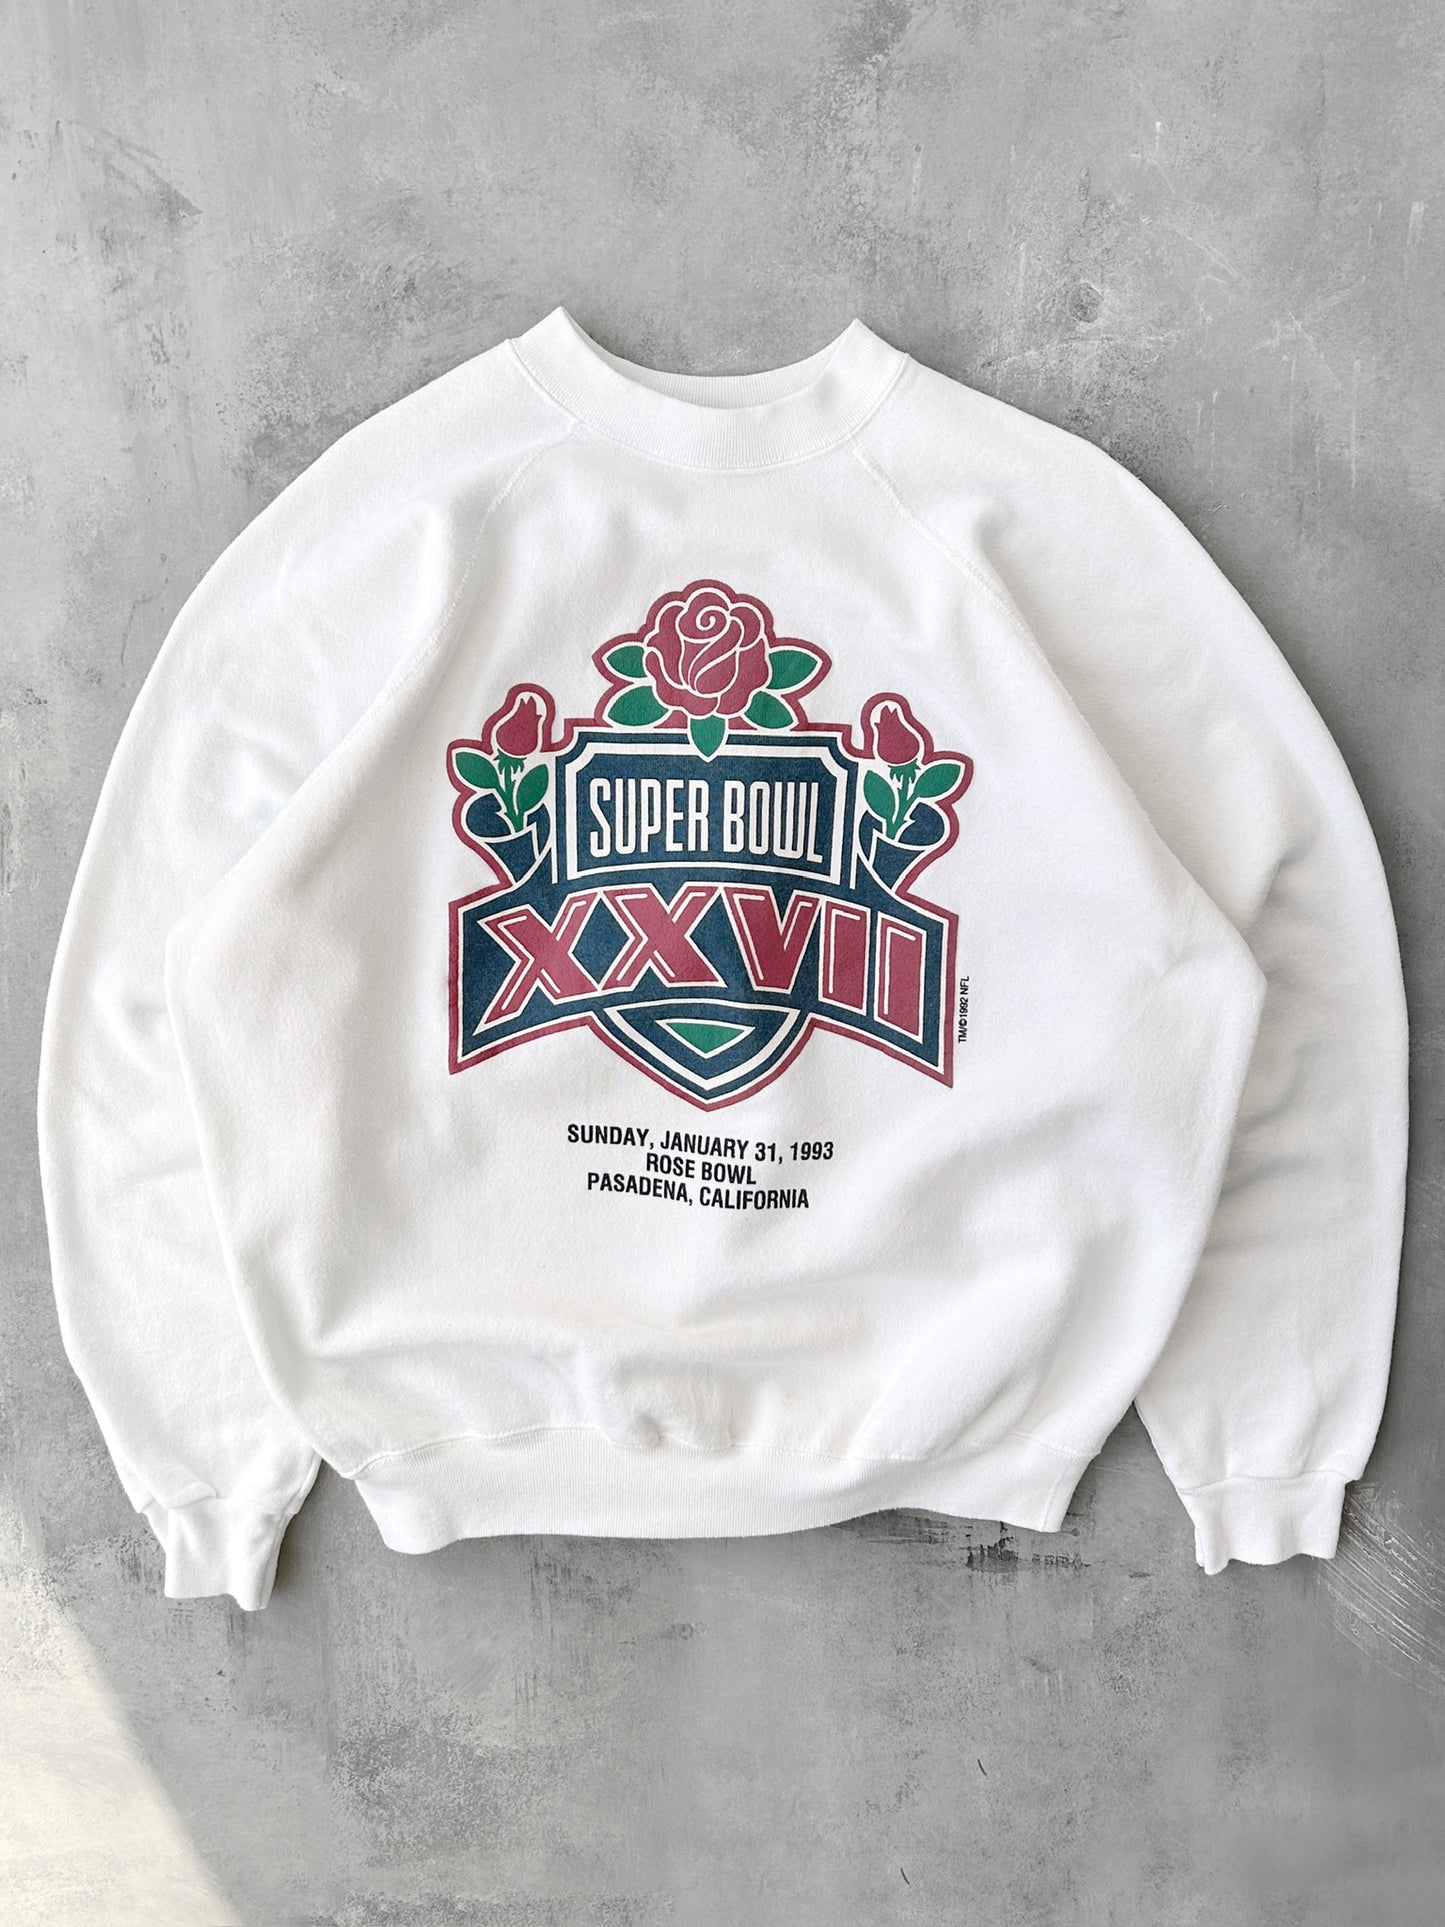 Super Bowl XXVII Sweatshirt '93 - XL